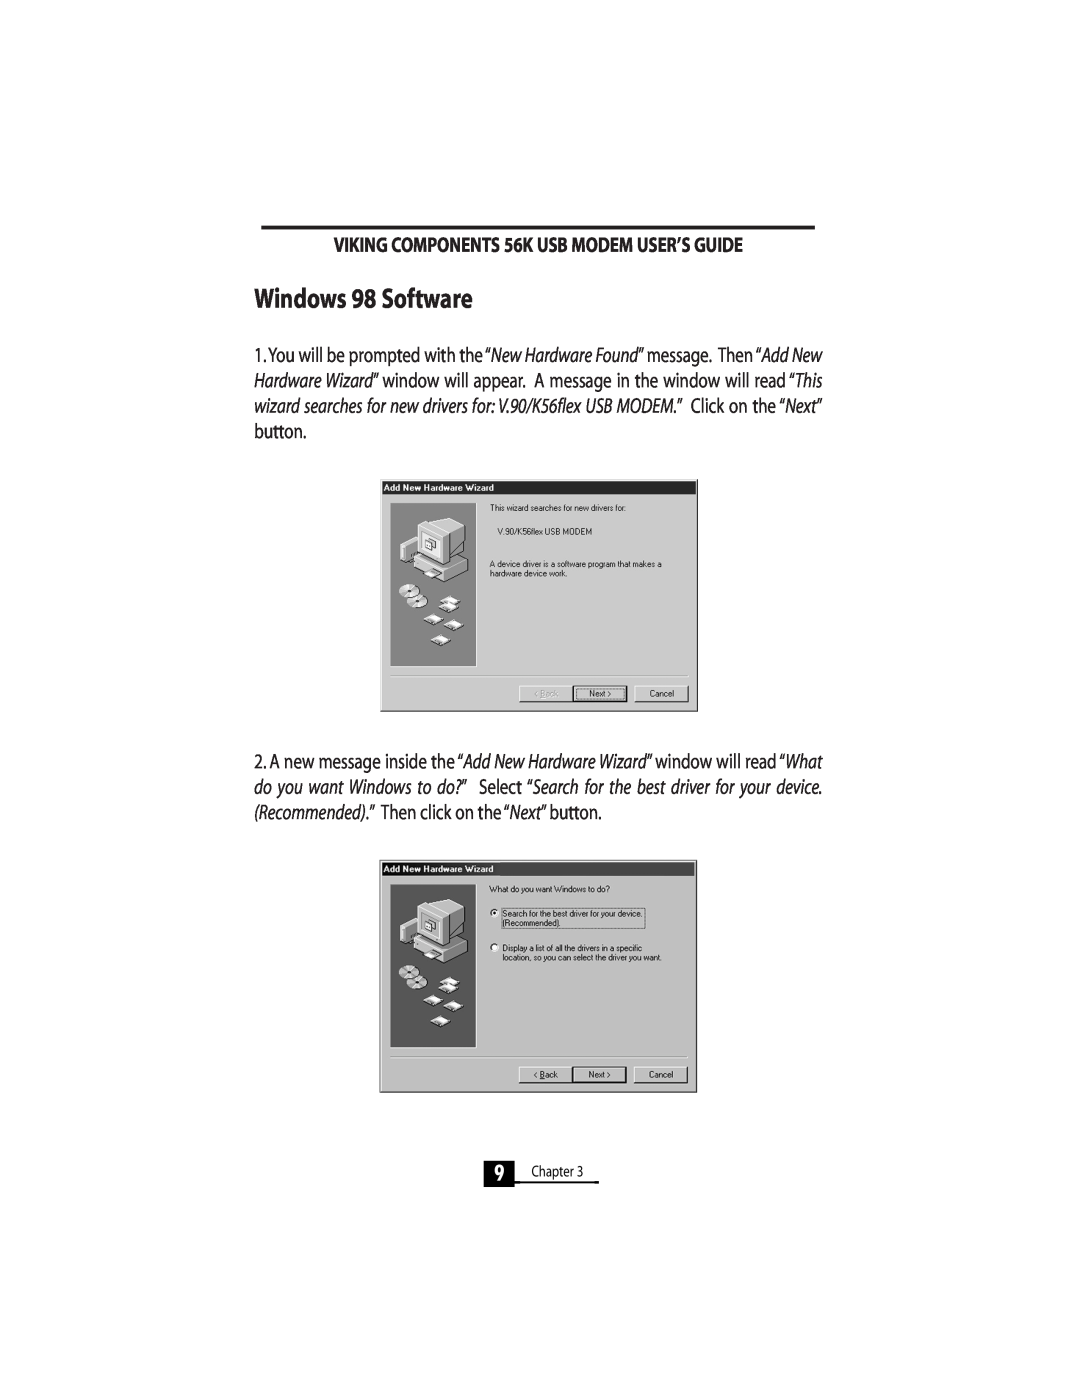 Viking InterWorks 56K manual Windows 98 Software, Chapter 